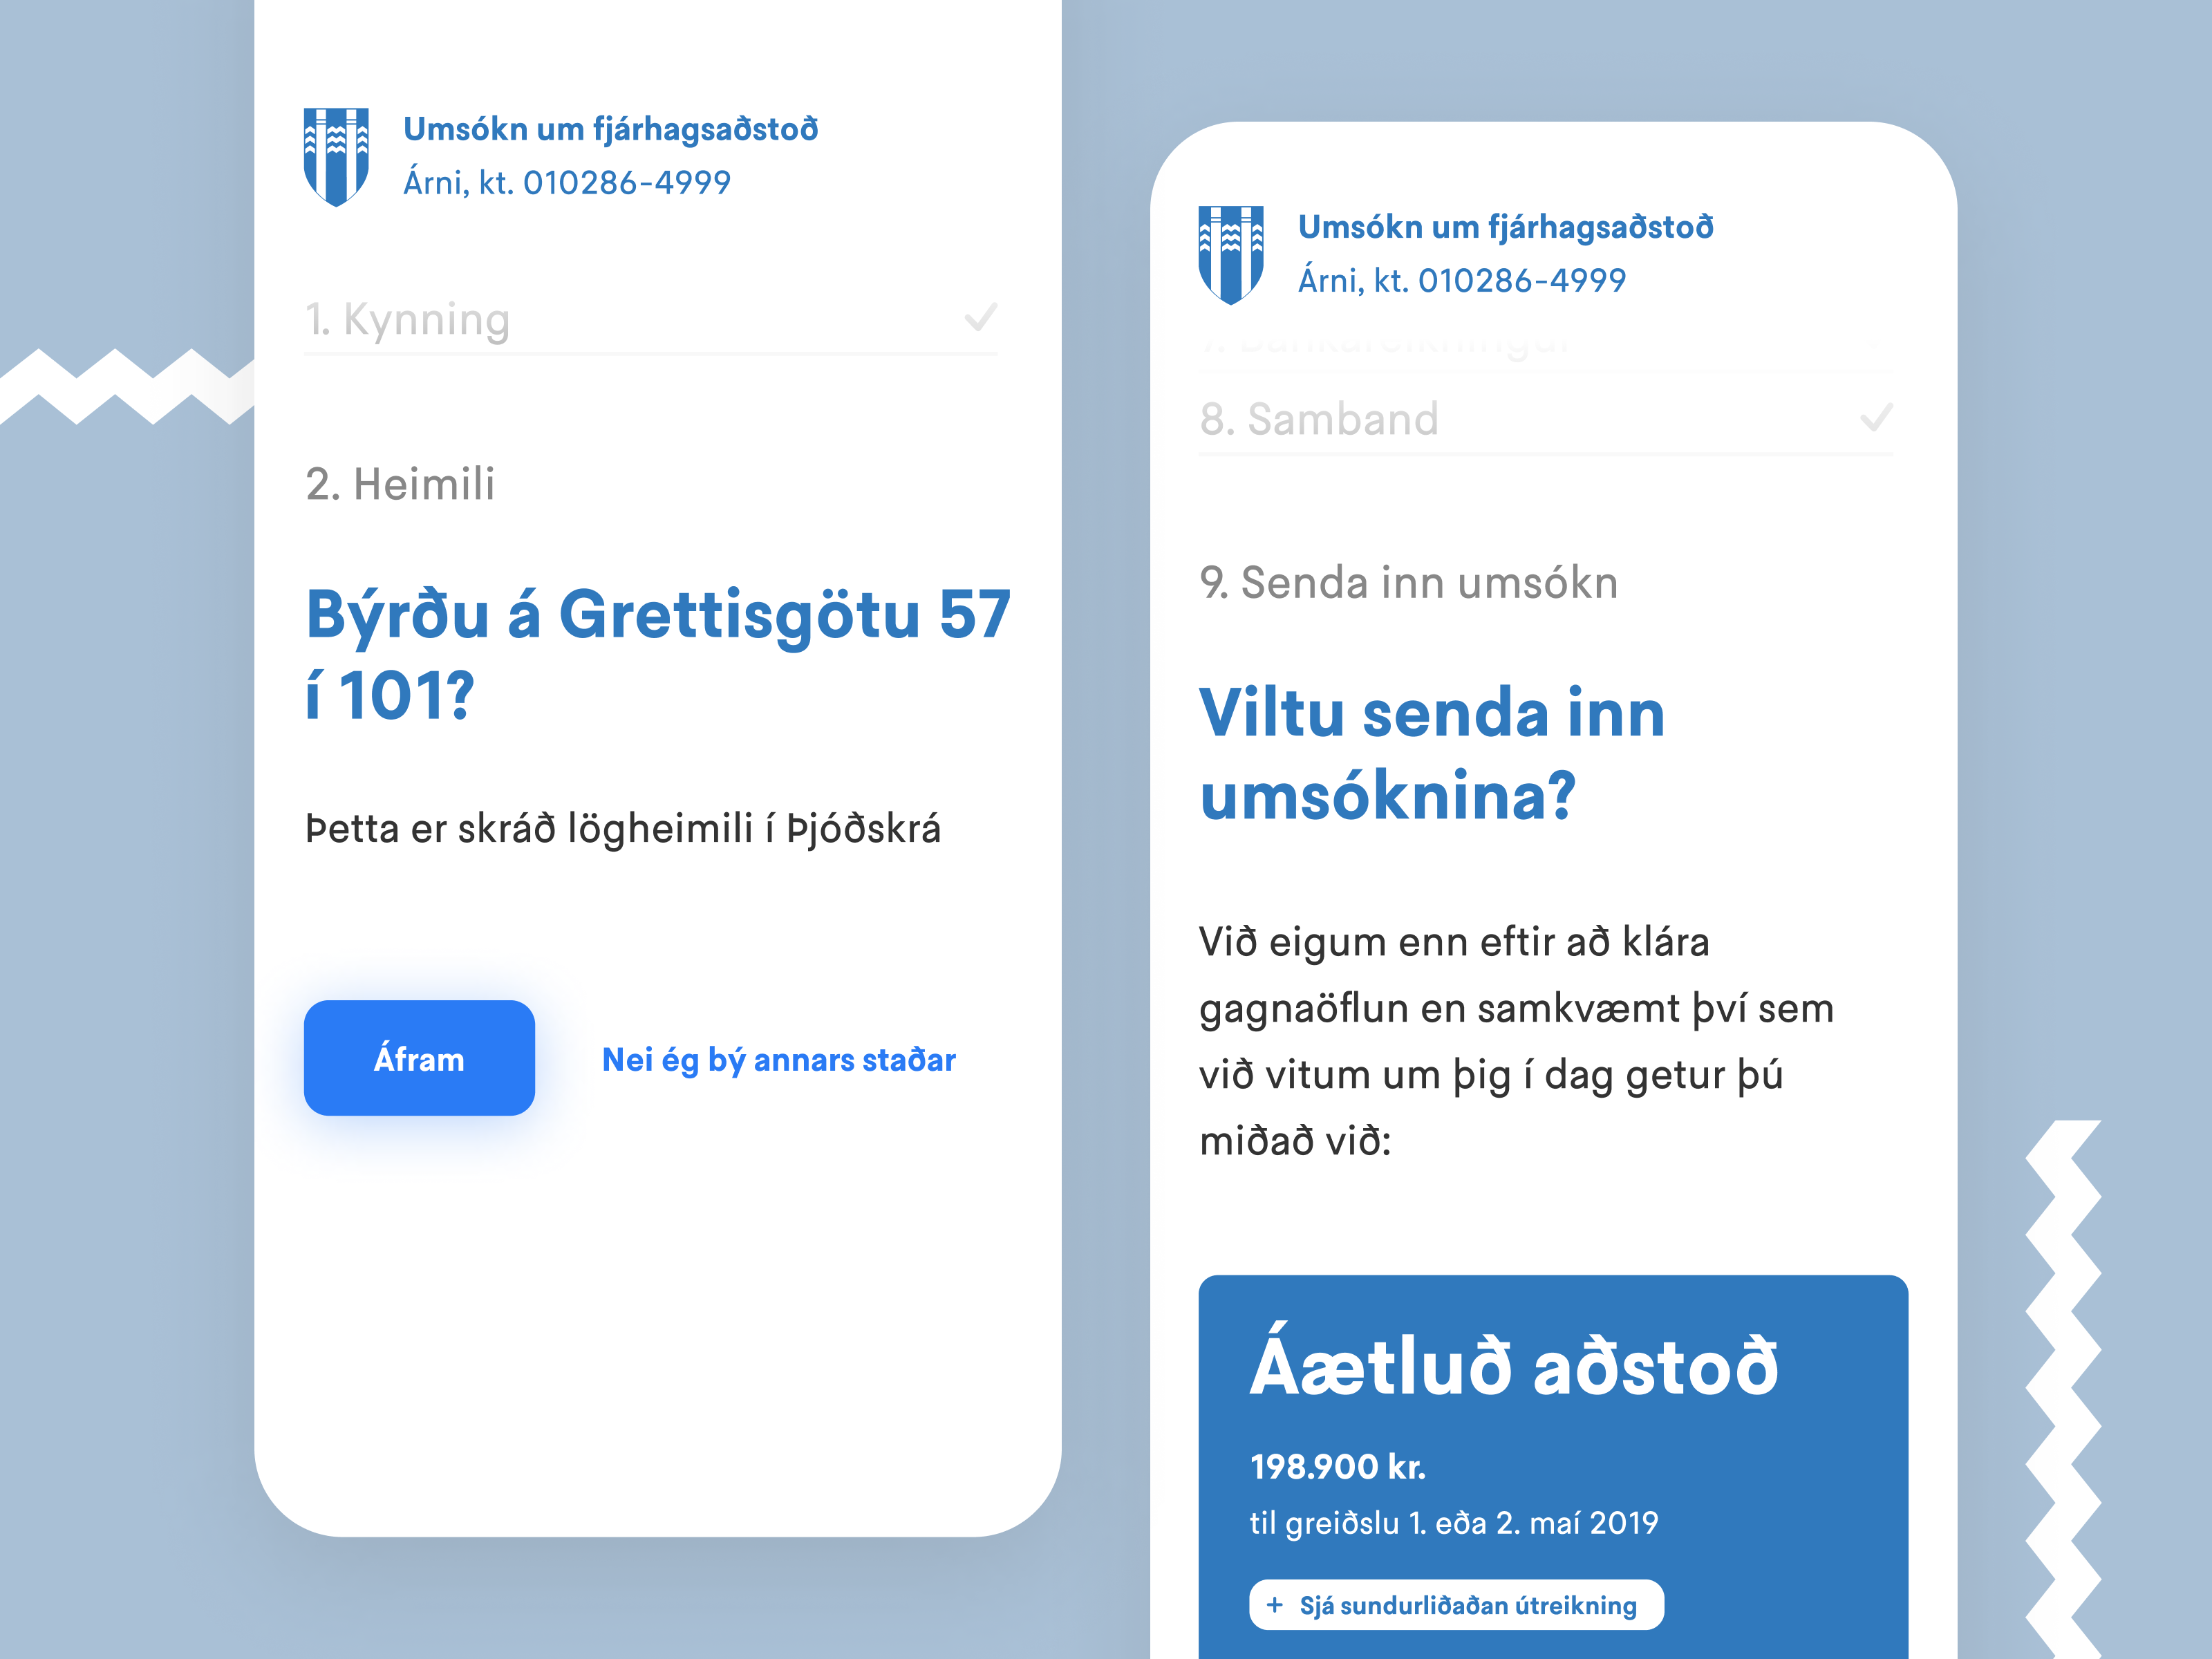 Digital financial aid for Reykjavik City